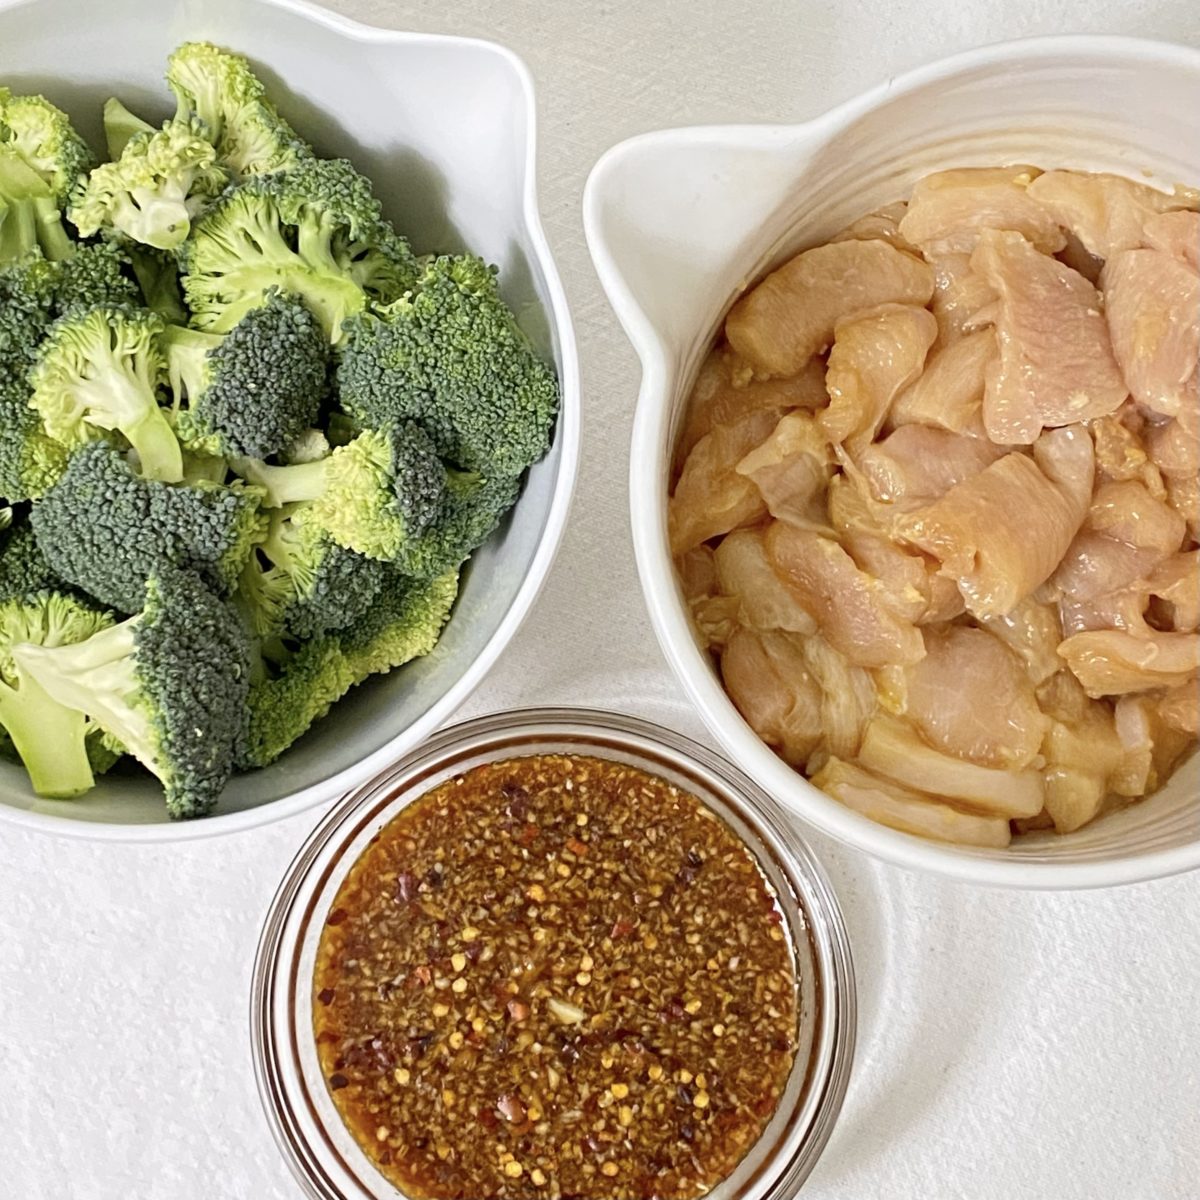 Broccoli, chicken, and honey garlic sauce in bowls.